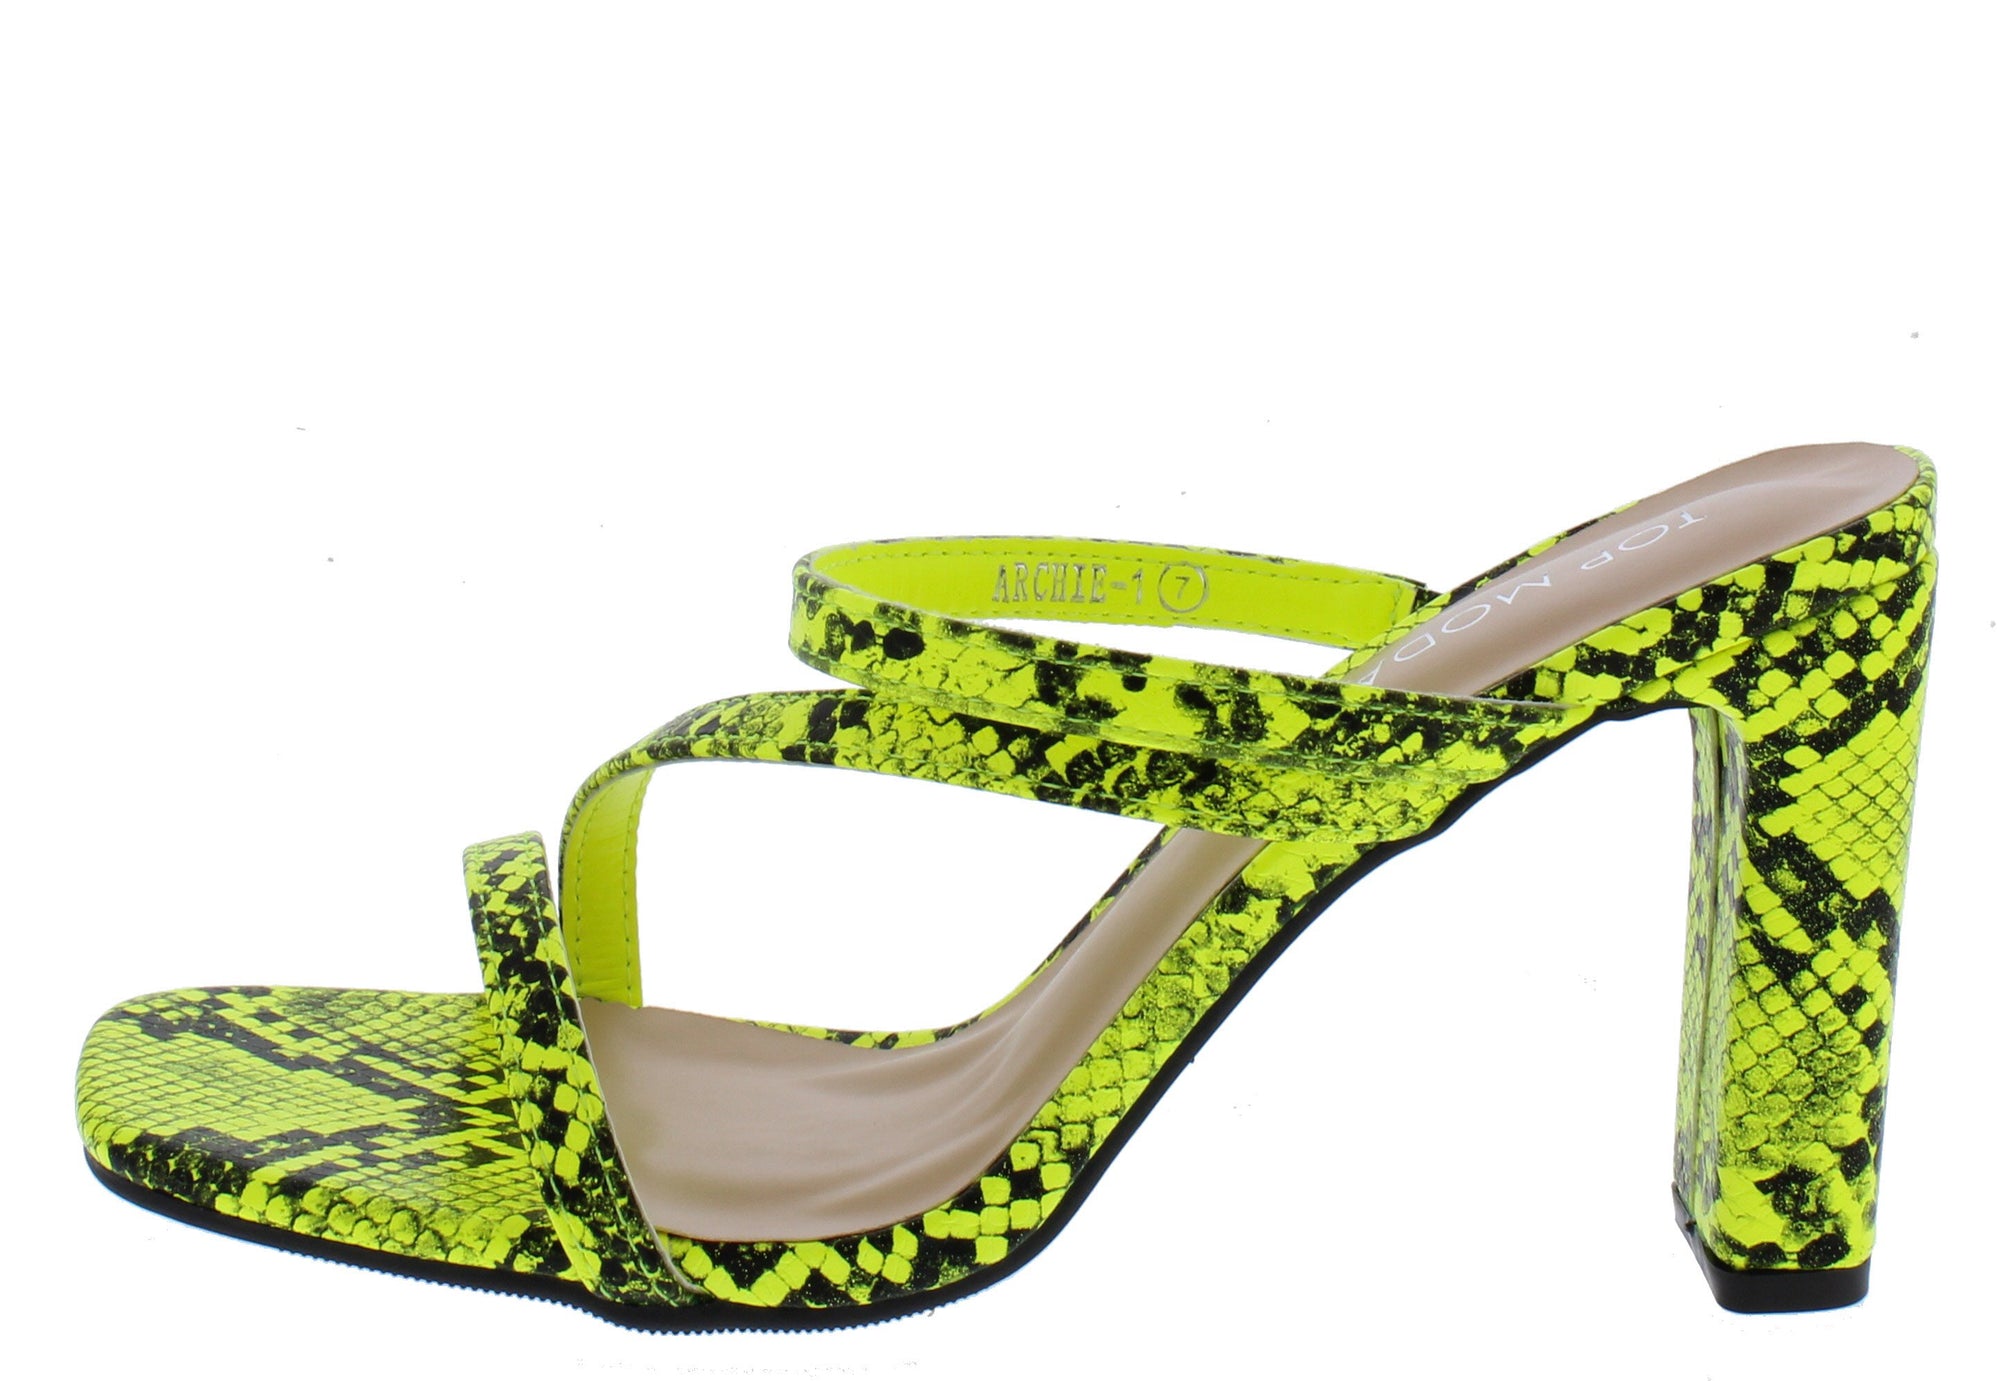 wholesale fashion heels